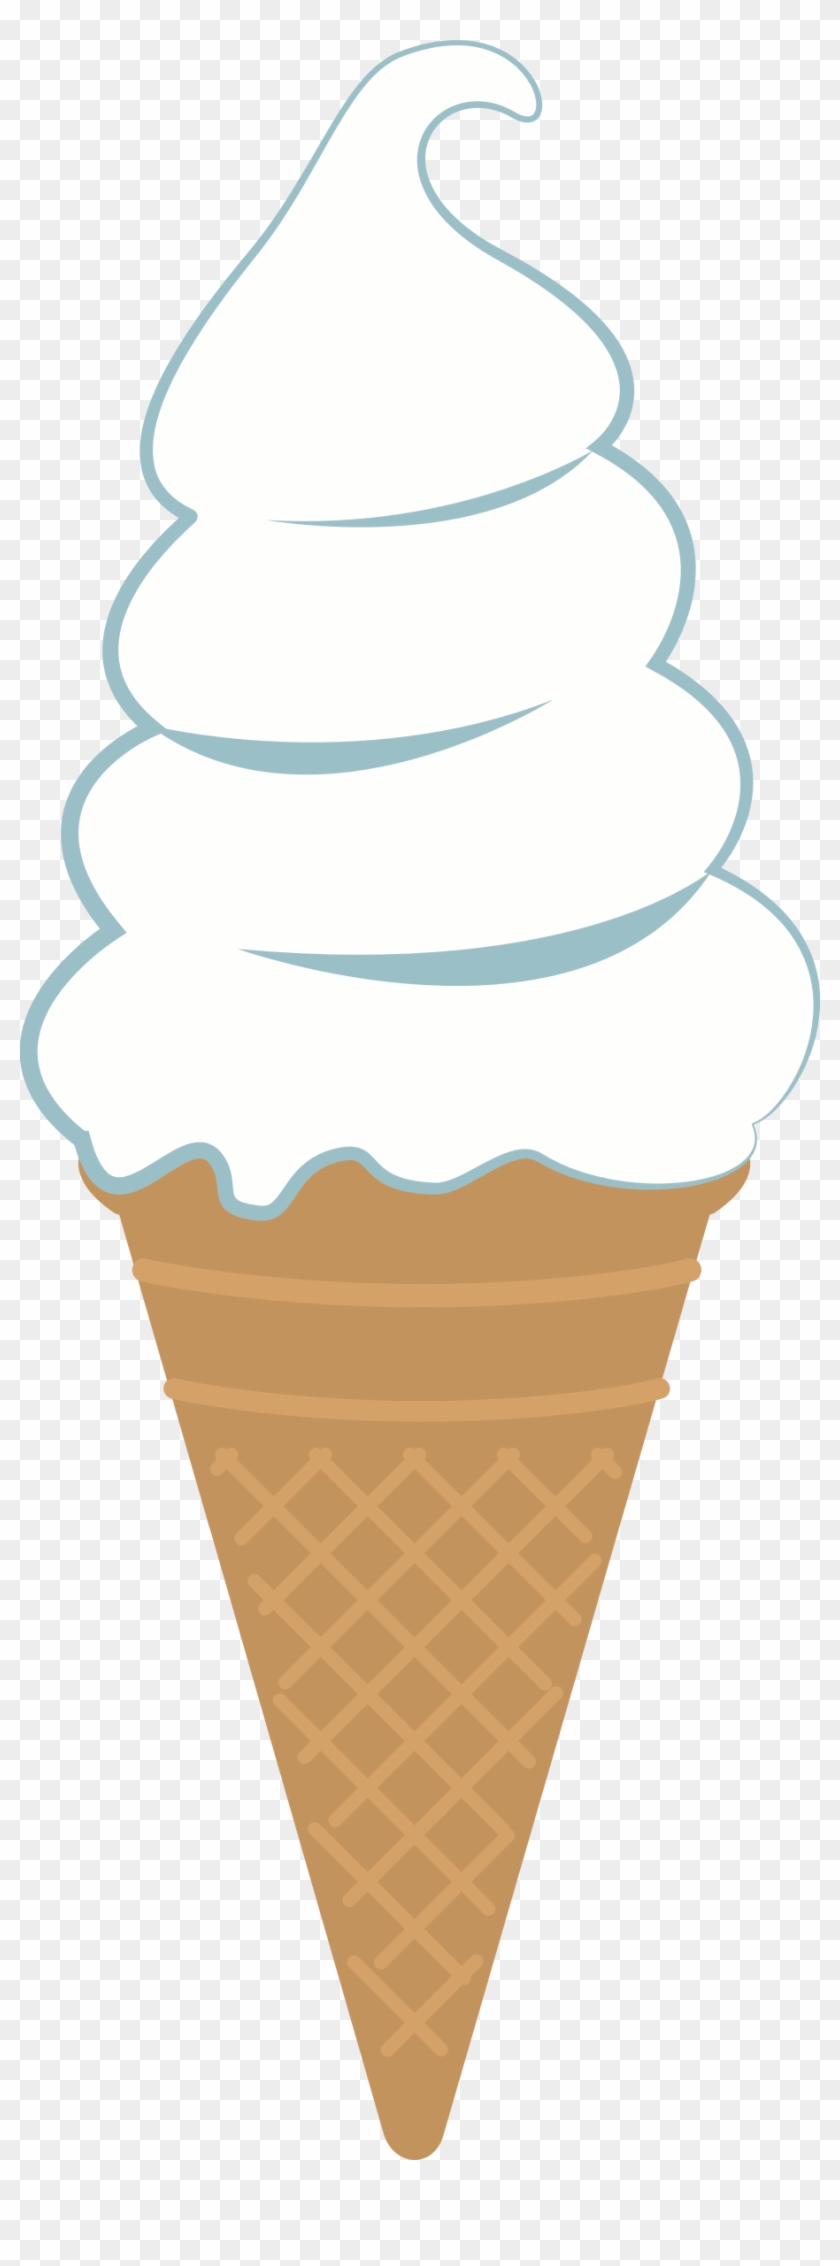 Big Image - Clip Art Ice Cream Cone - Png Download